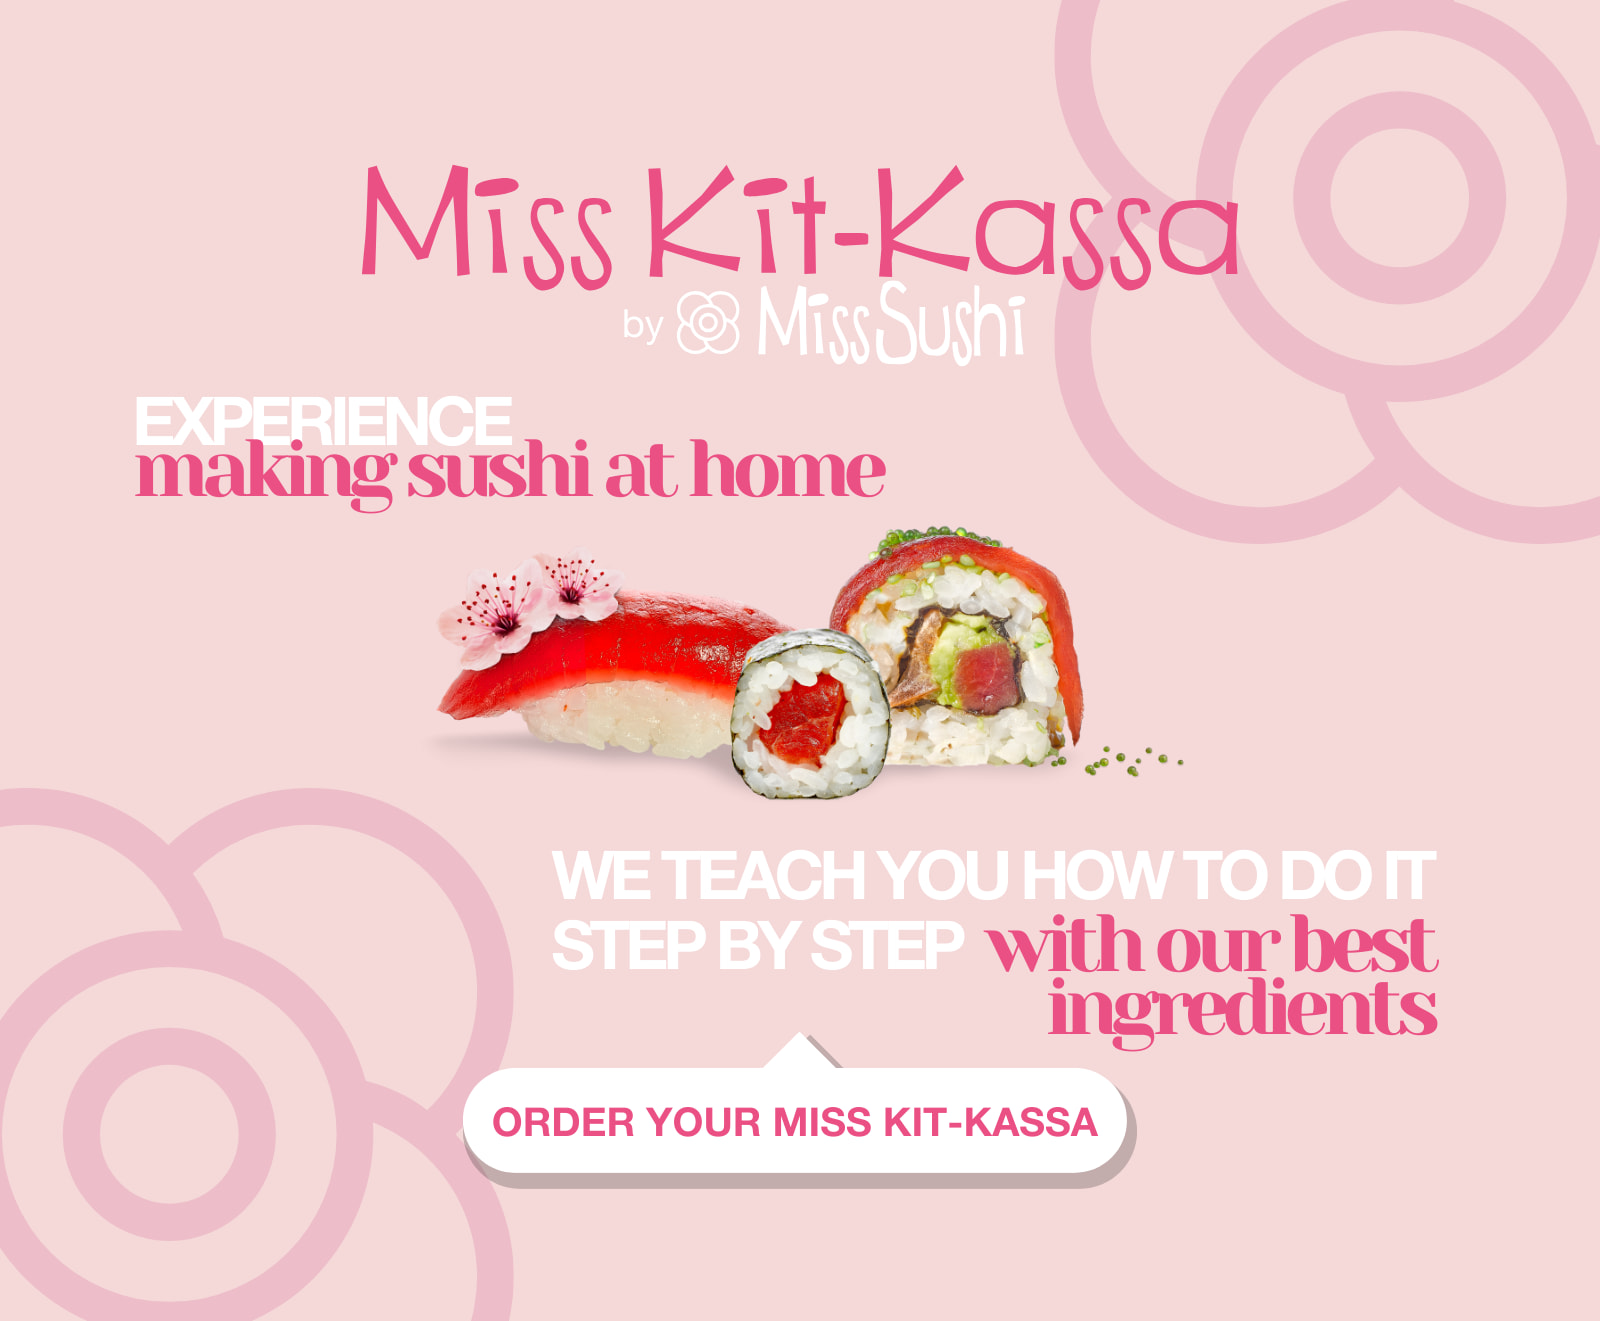 Order your Miss Kit-Kassa now